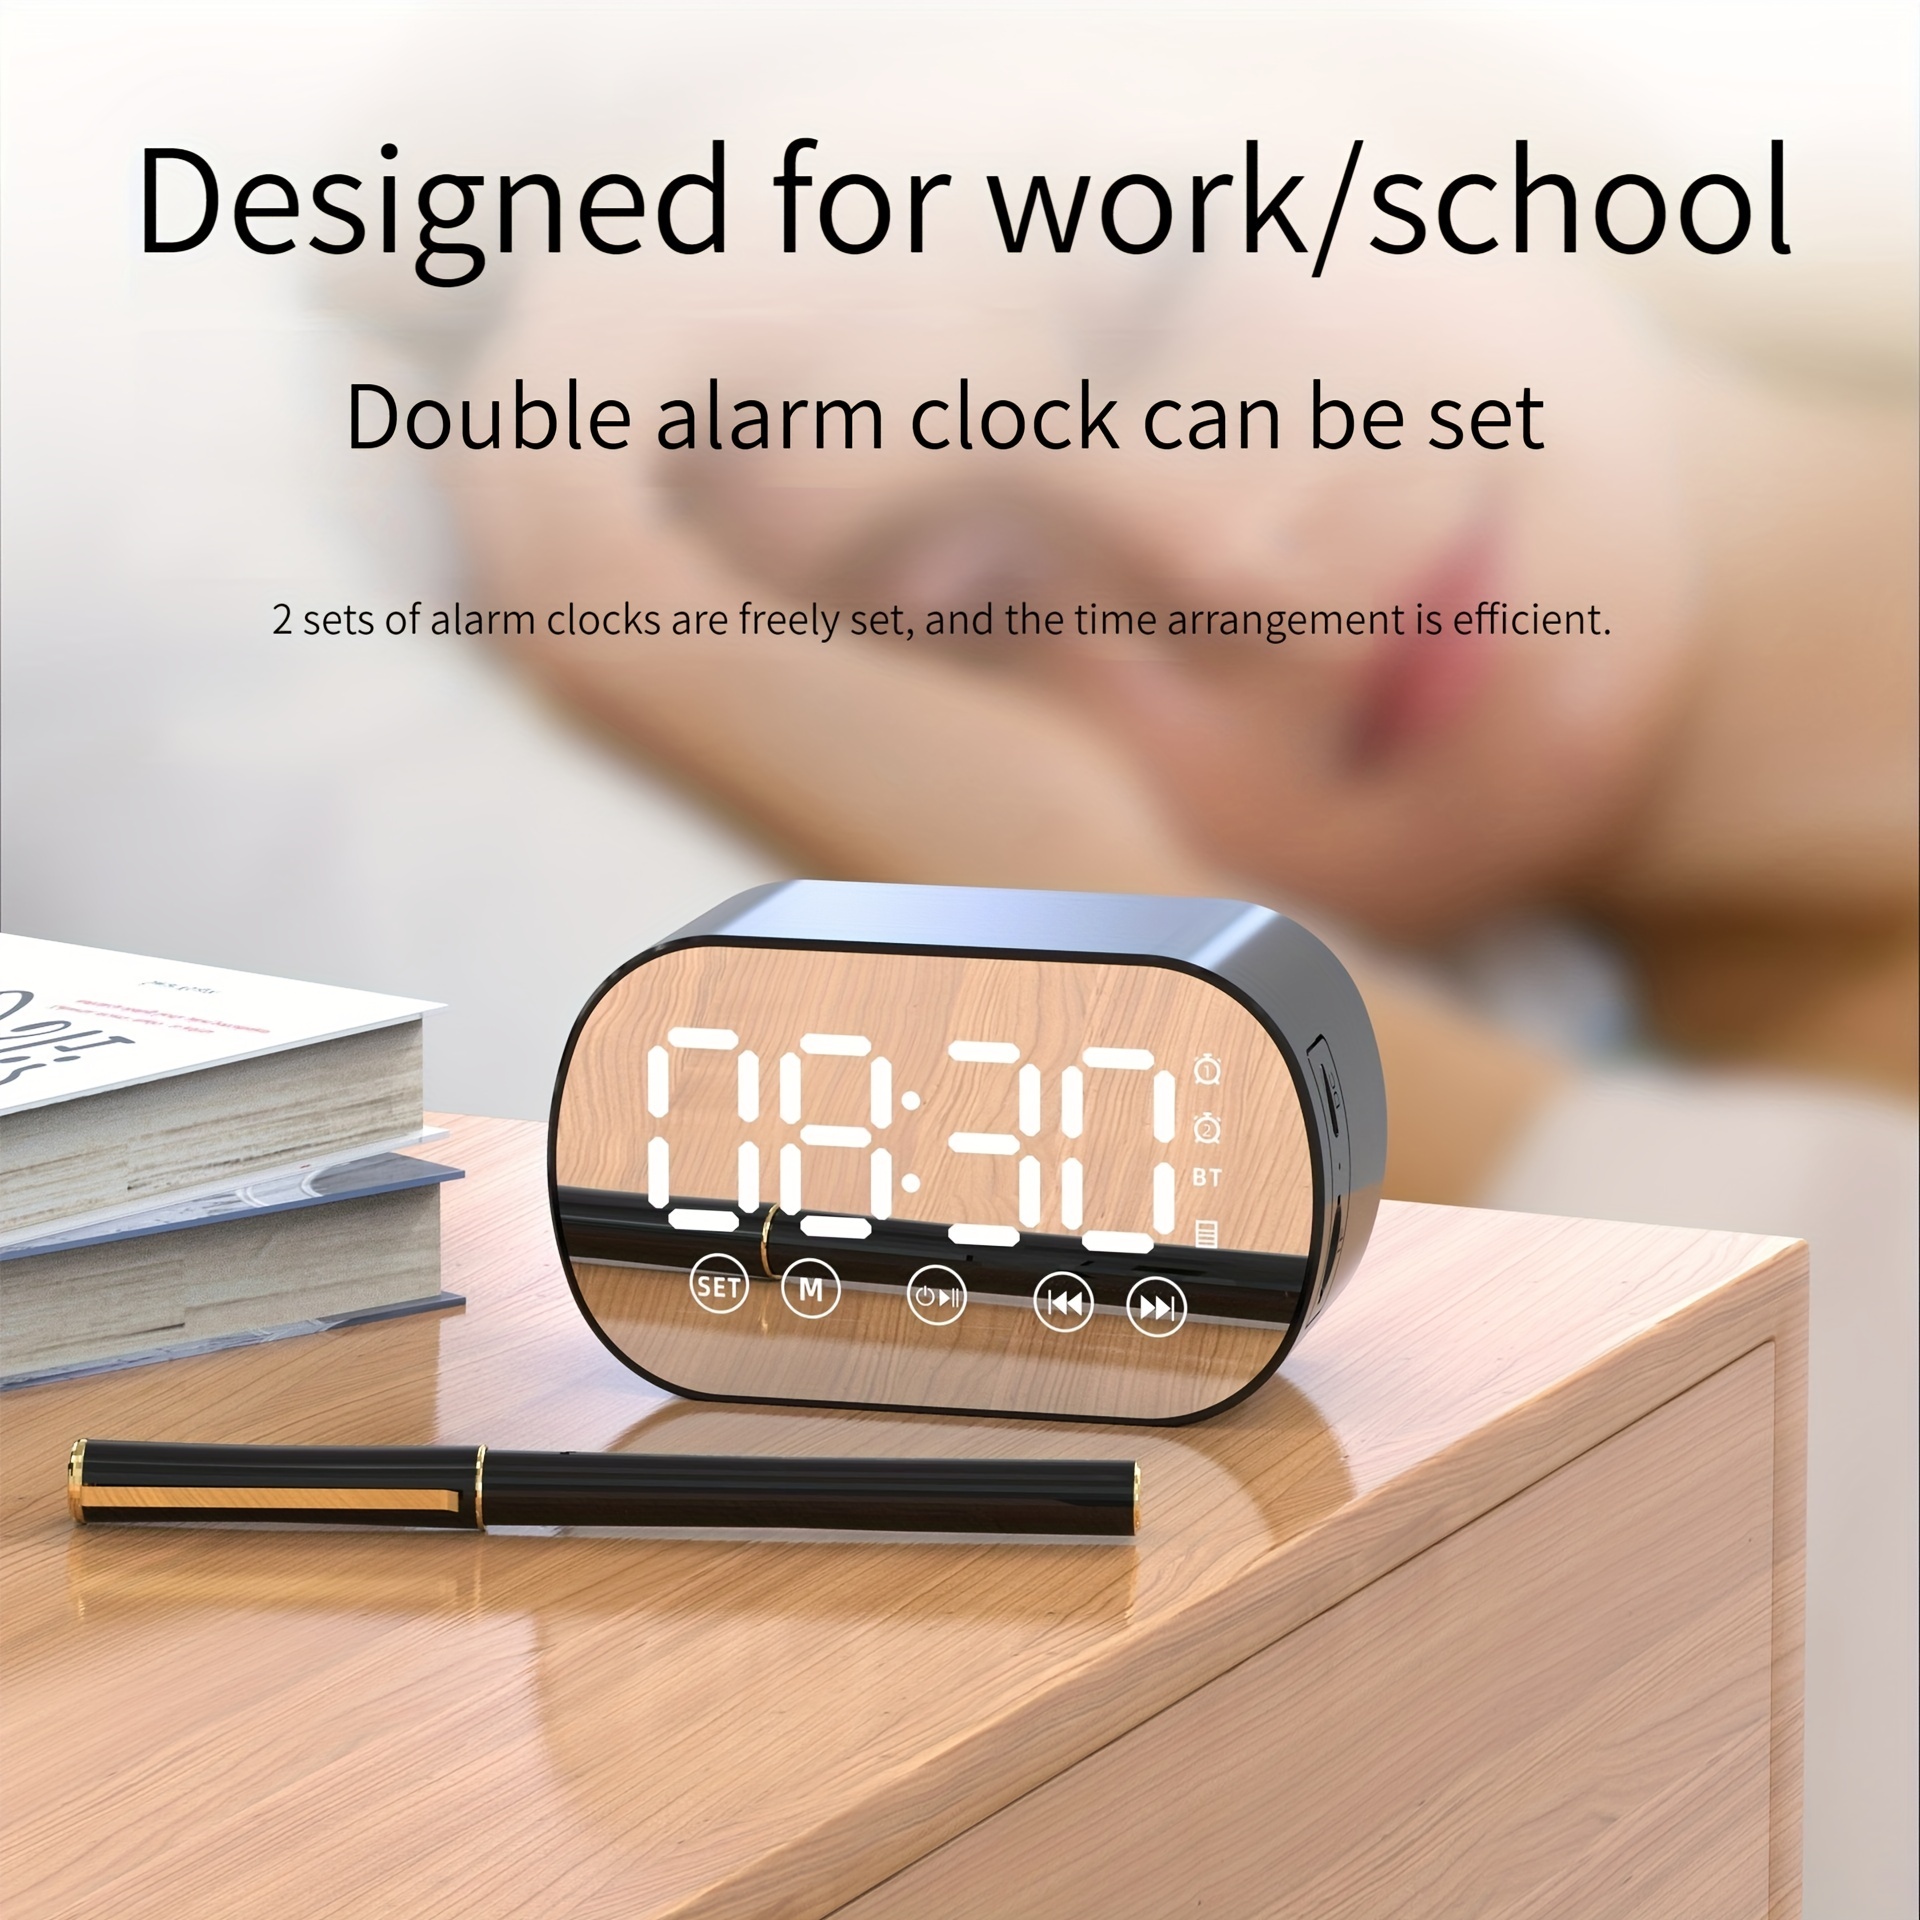 Altavoz alarma dual reloj despertador digital bluetooth pantalla